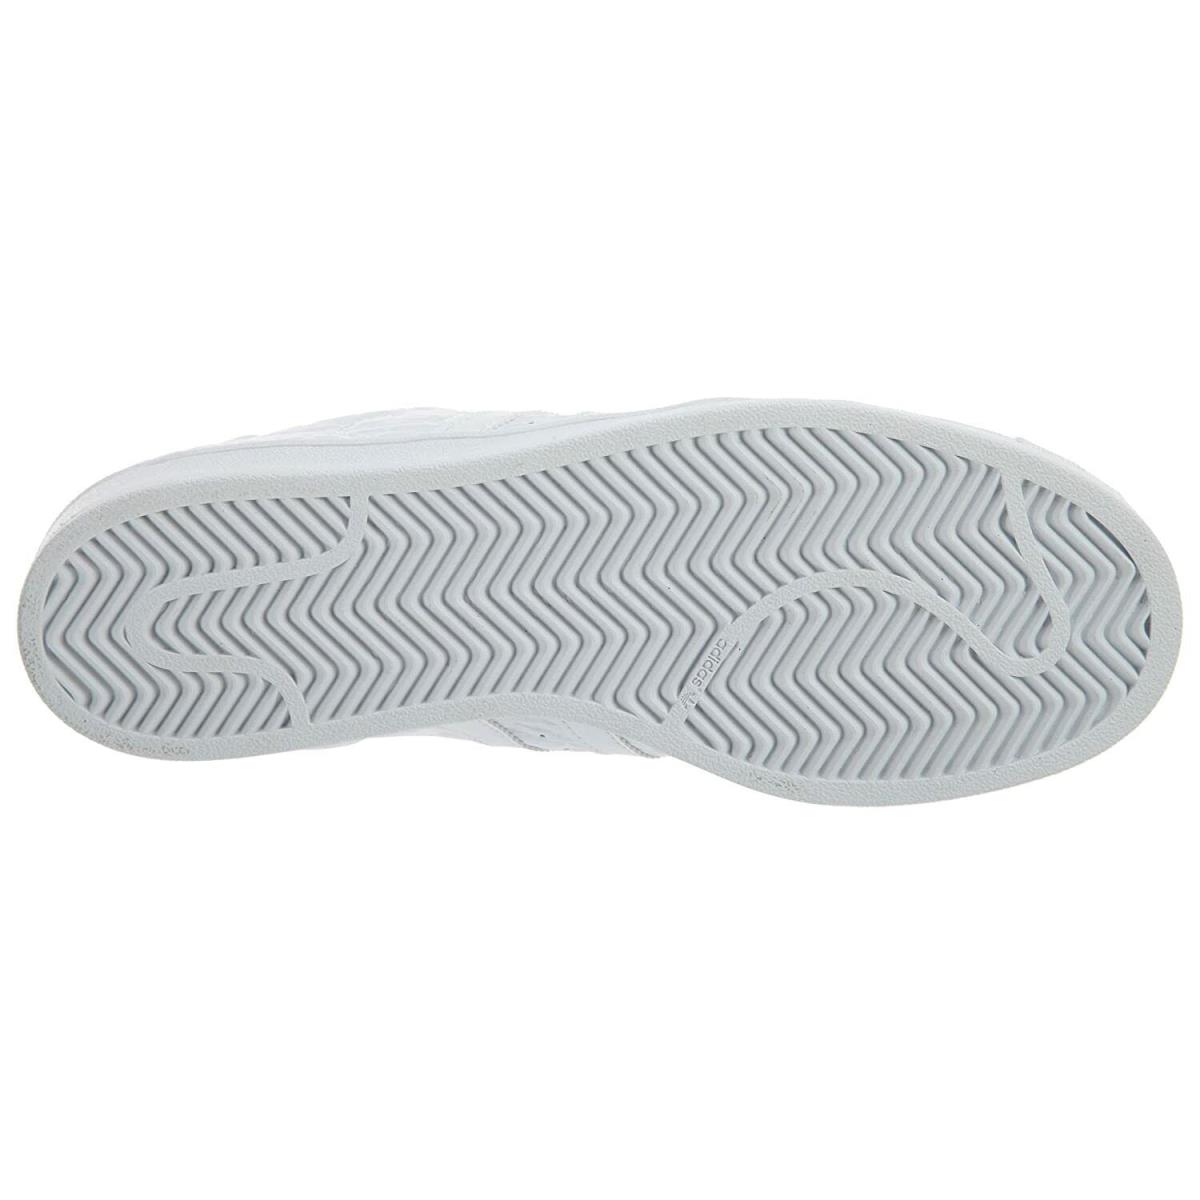 Adidas shoes Originals Superstar Croc - White 12